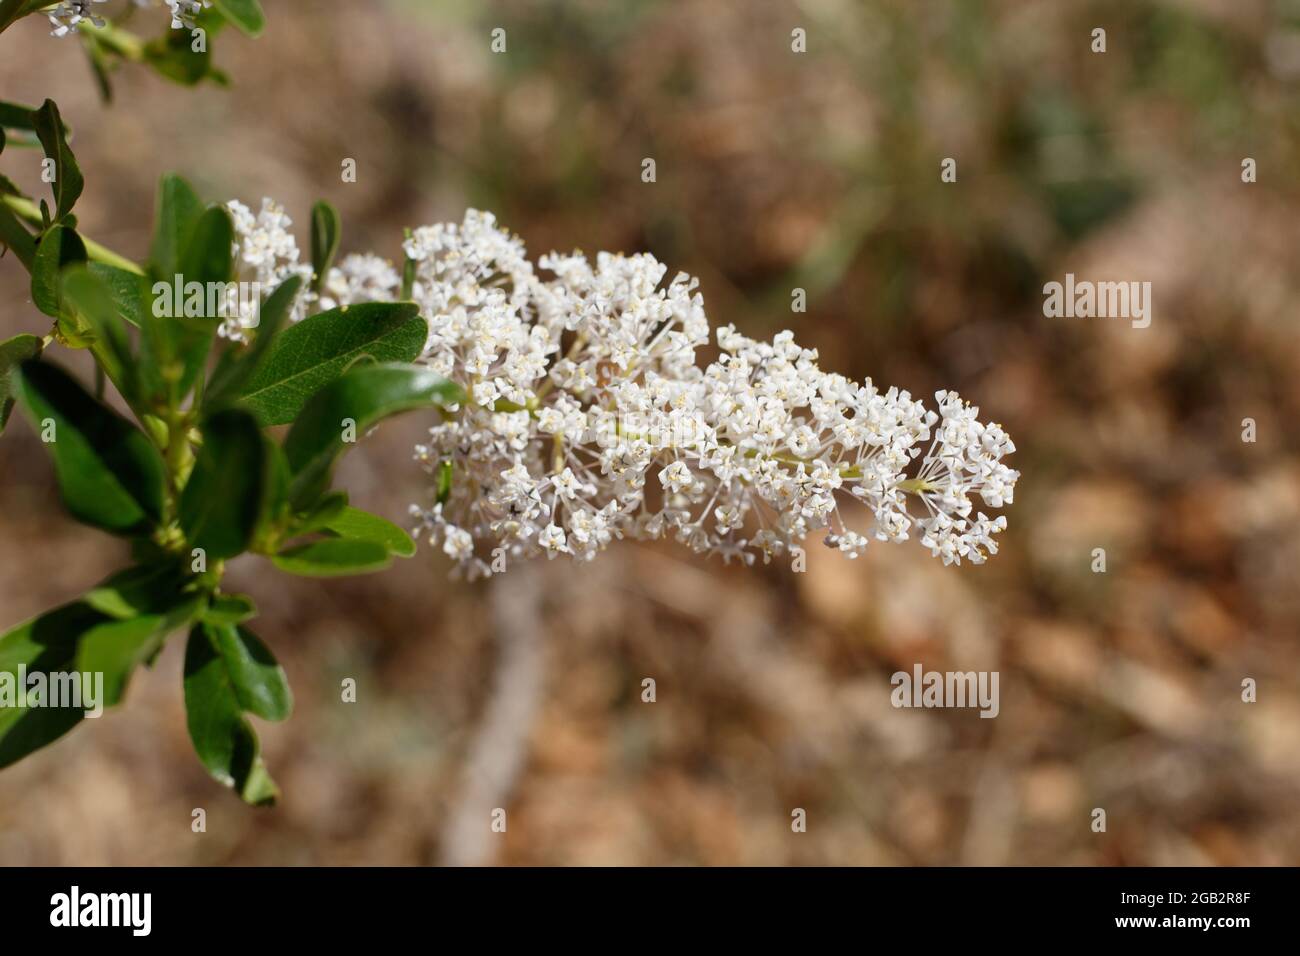 White Axillary panicle inflorescences of Greenbark Buckbrush, Ceanothus Spinosus, Rhamnaceae, native in the Santa Monica Mountains, Springtime. Stock Photo